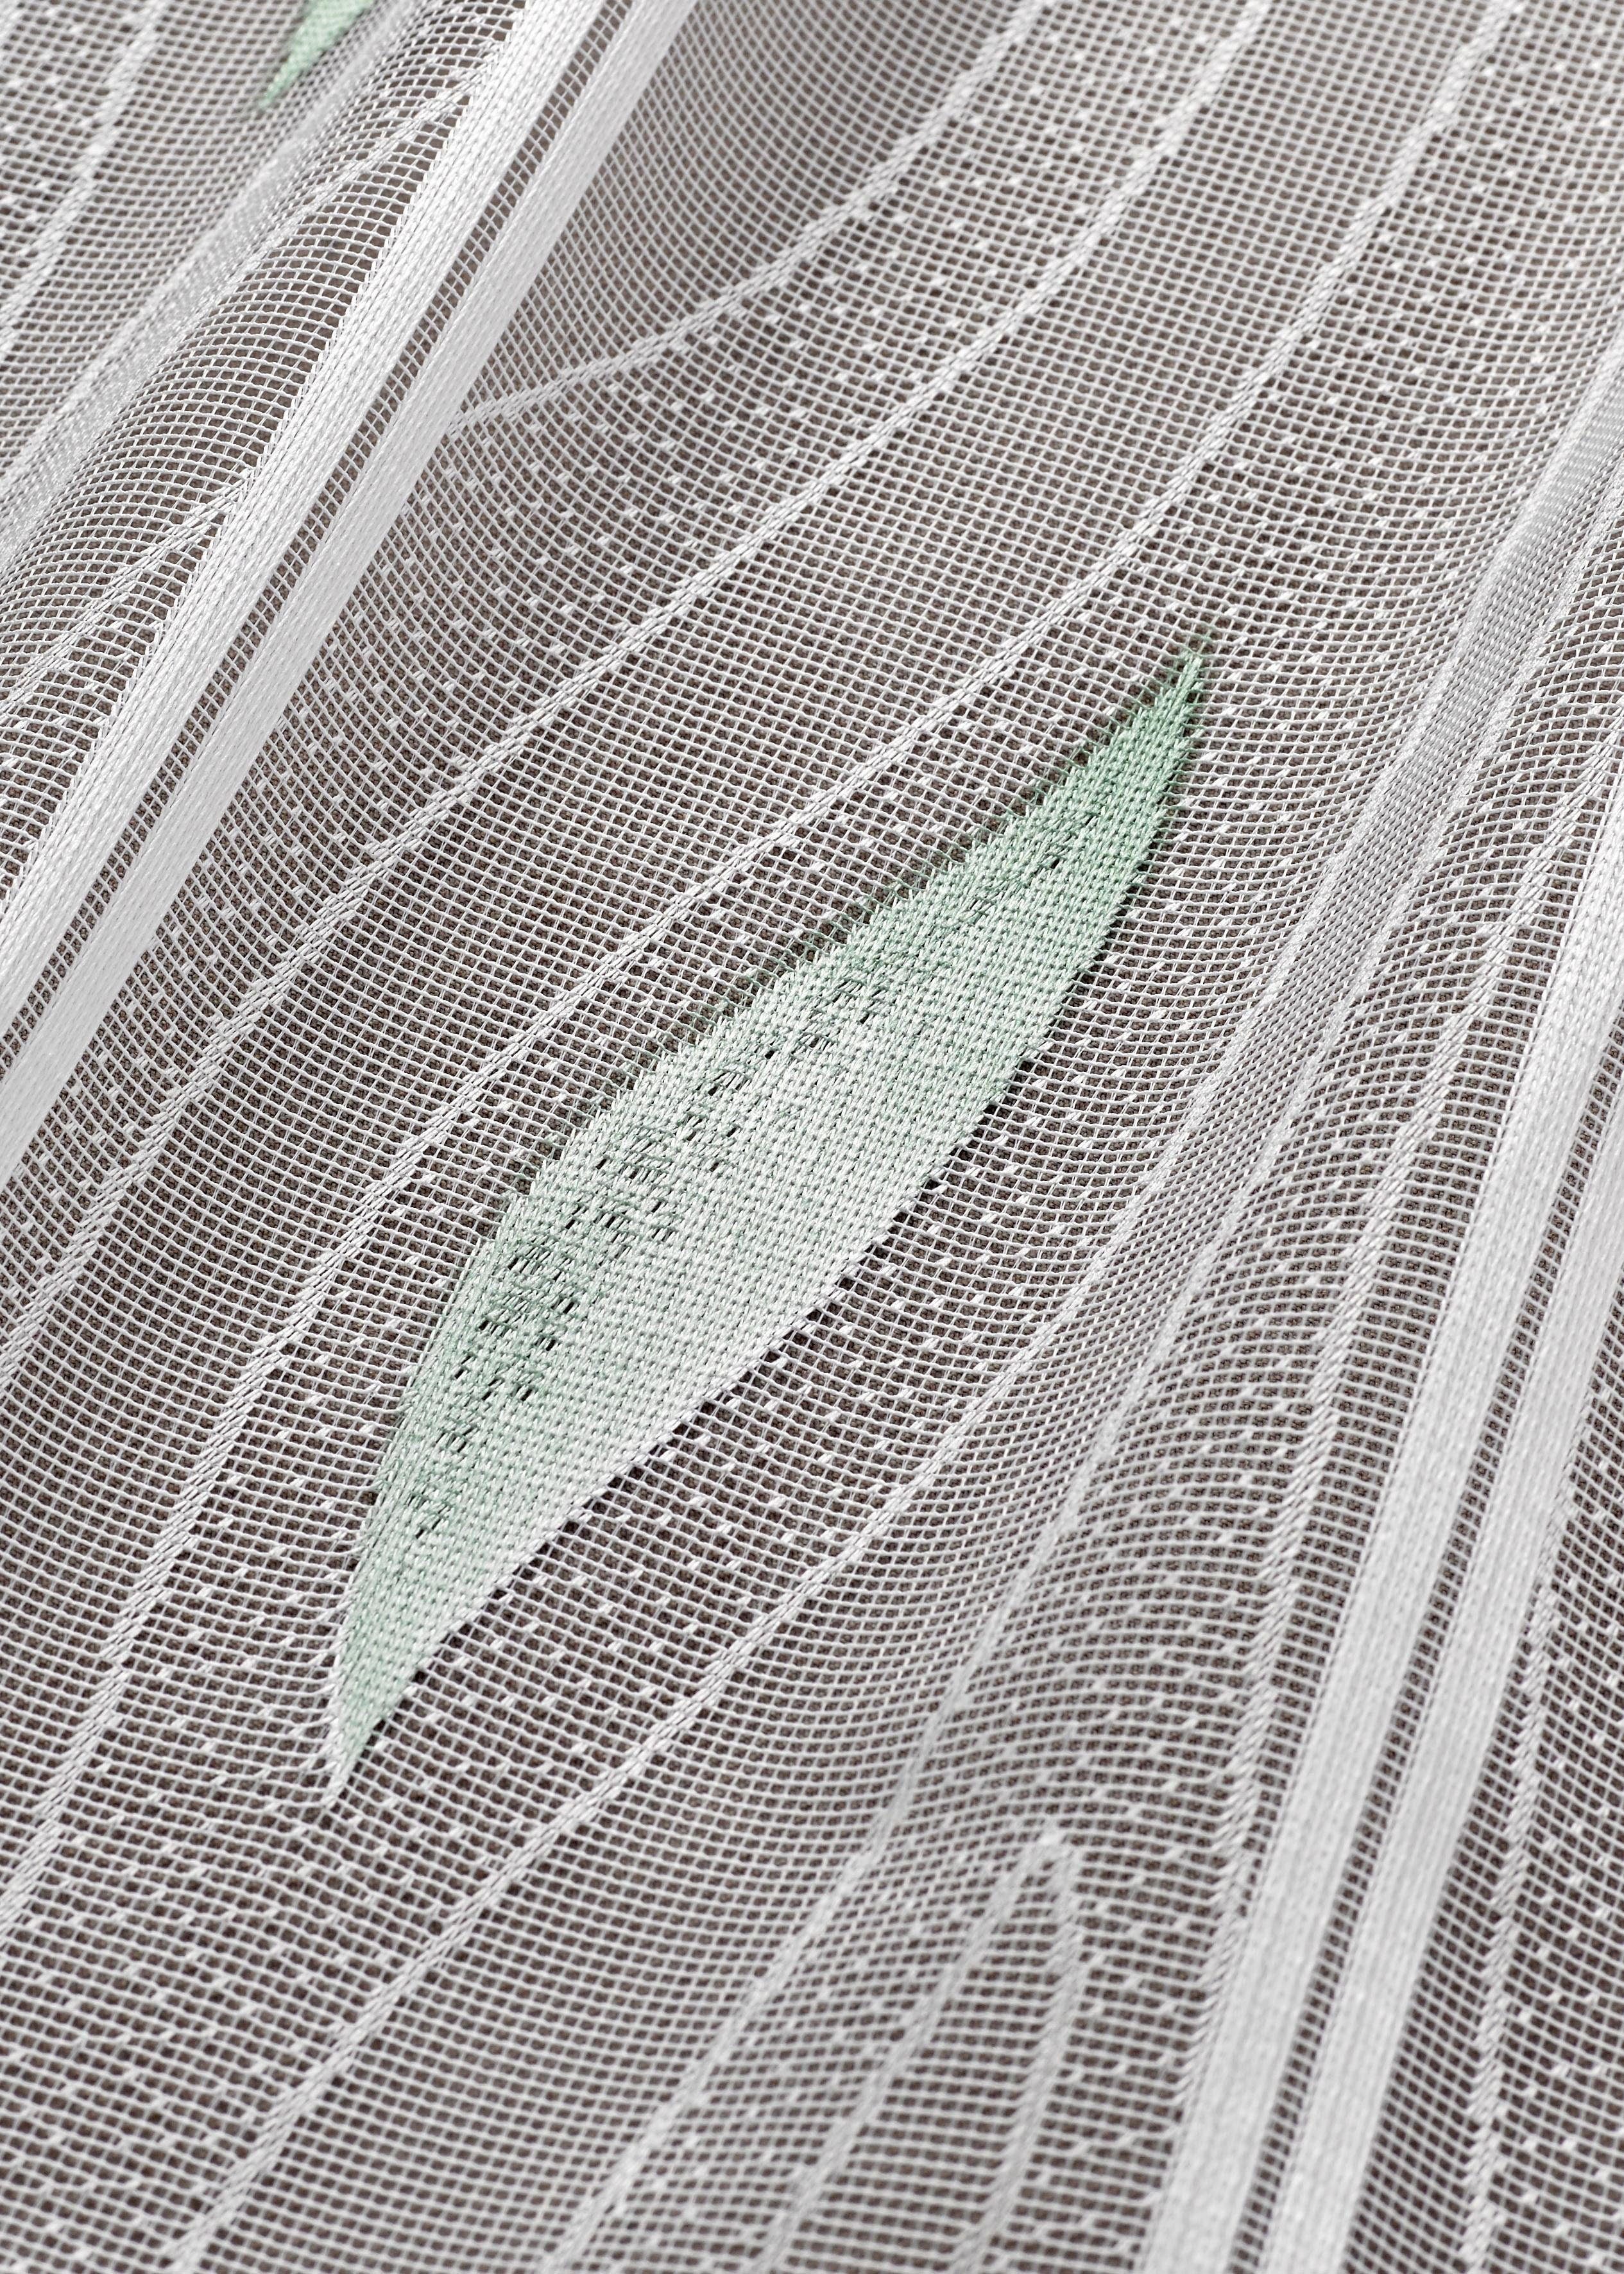 Scheibengardine Mathilda, transparent, St), grün/weiß/apricot VHG, (1 Stangendurchzug Jacquard